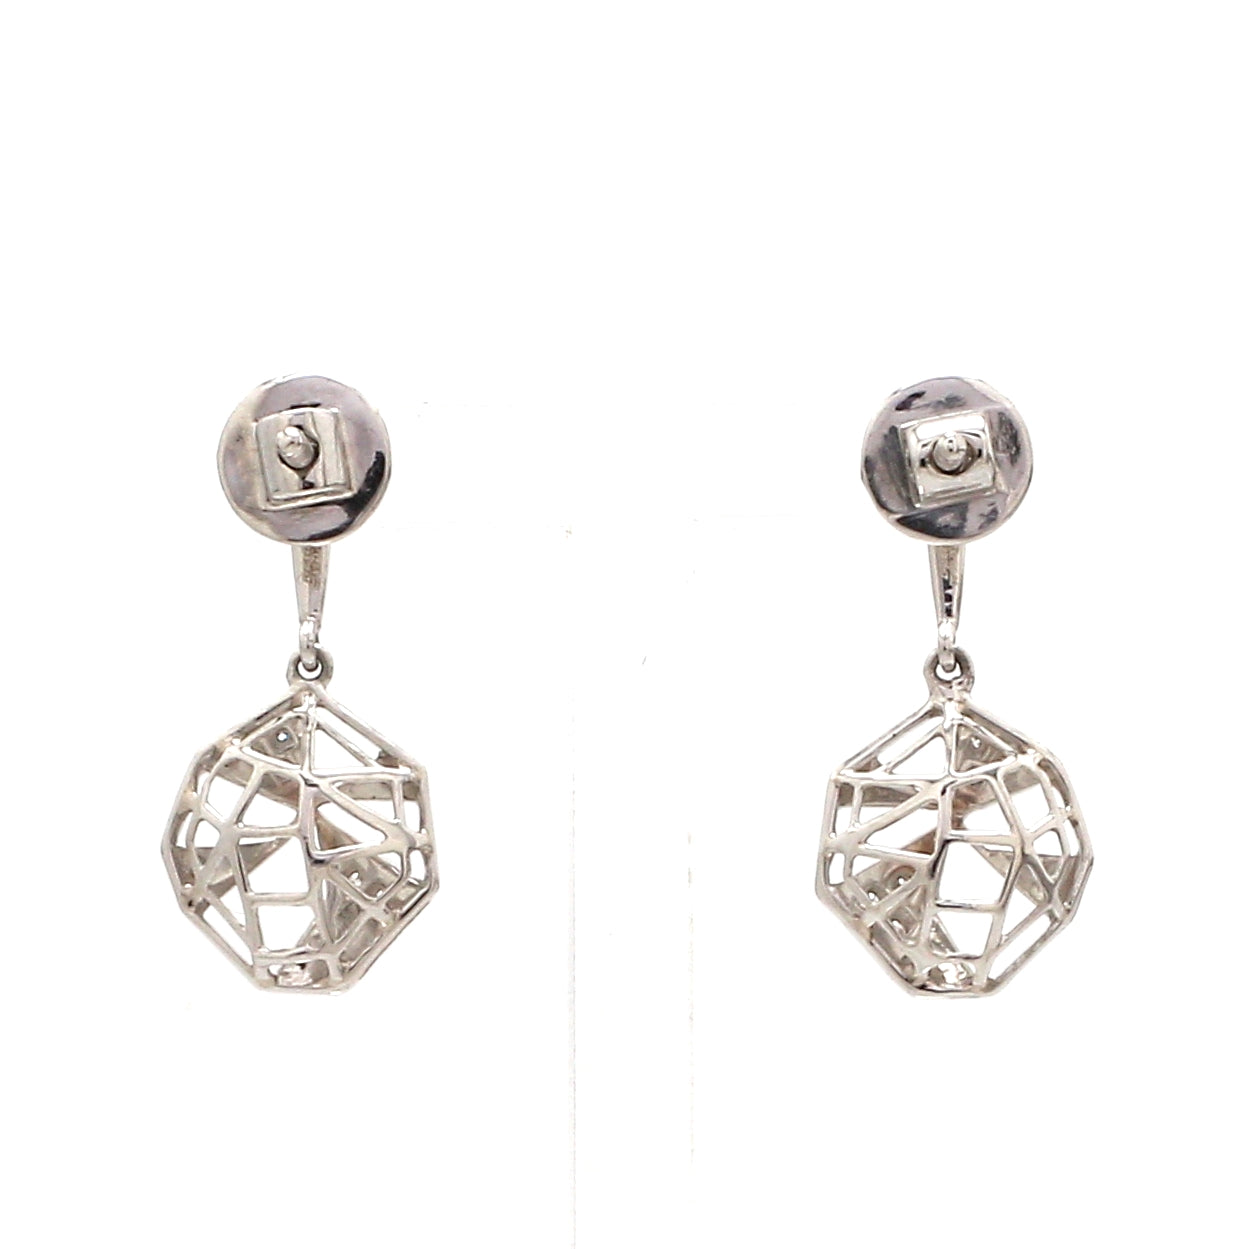 Evara Platinum Diamonds Earrings for Women JL PT E 267   Jewelove.US